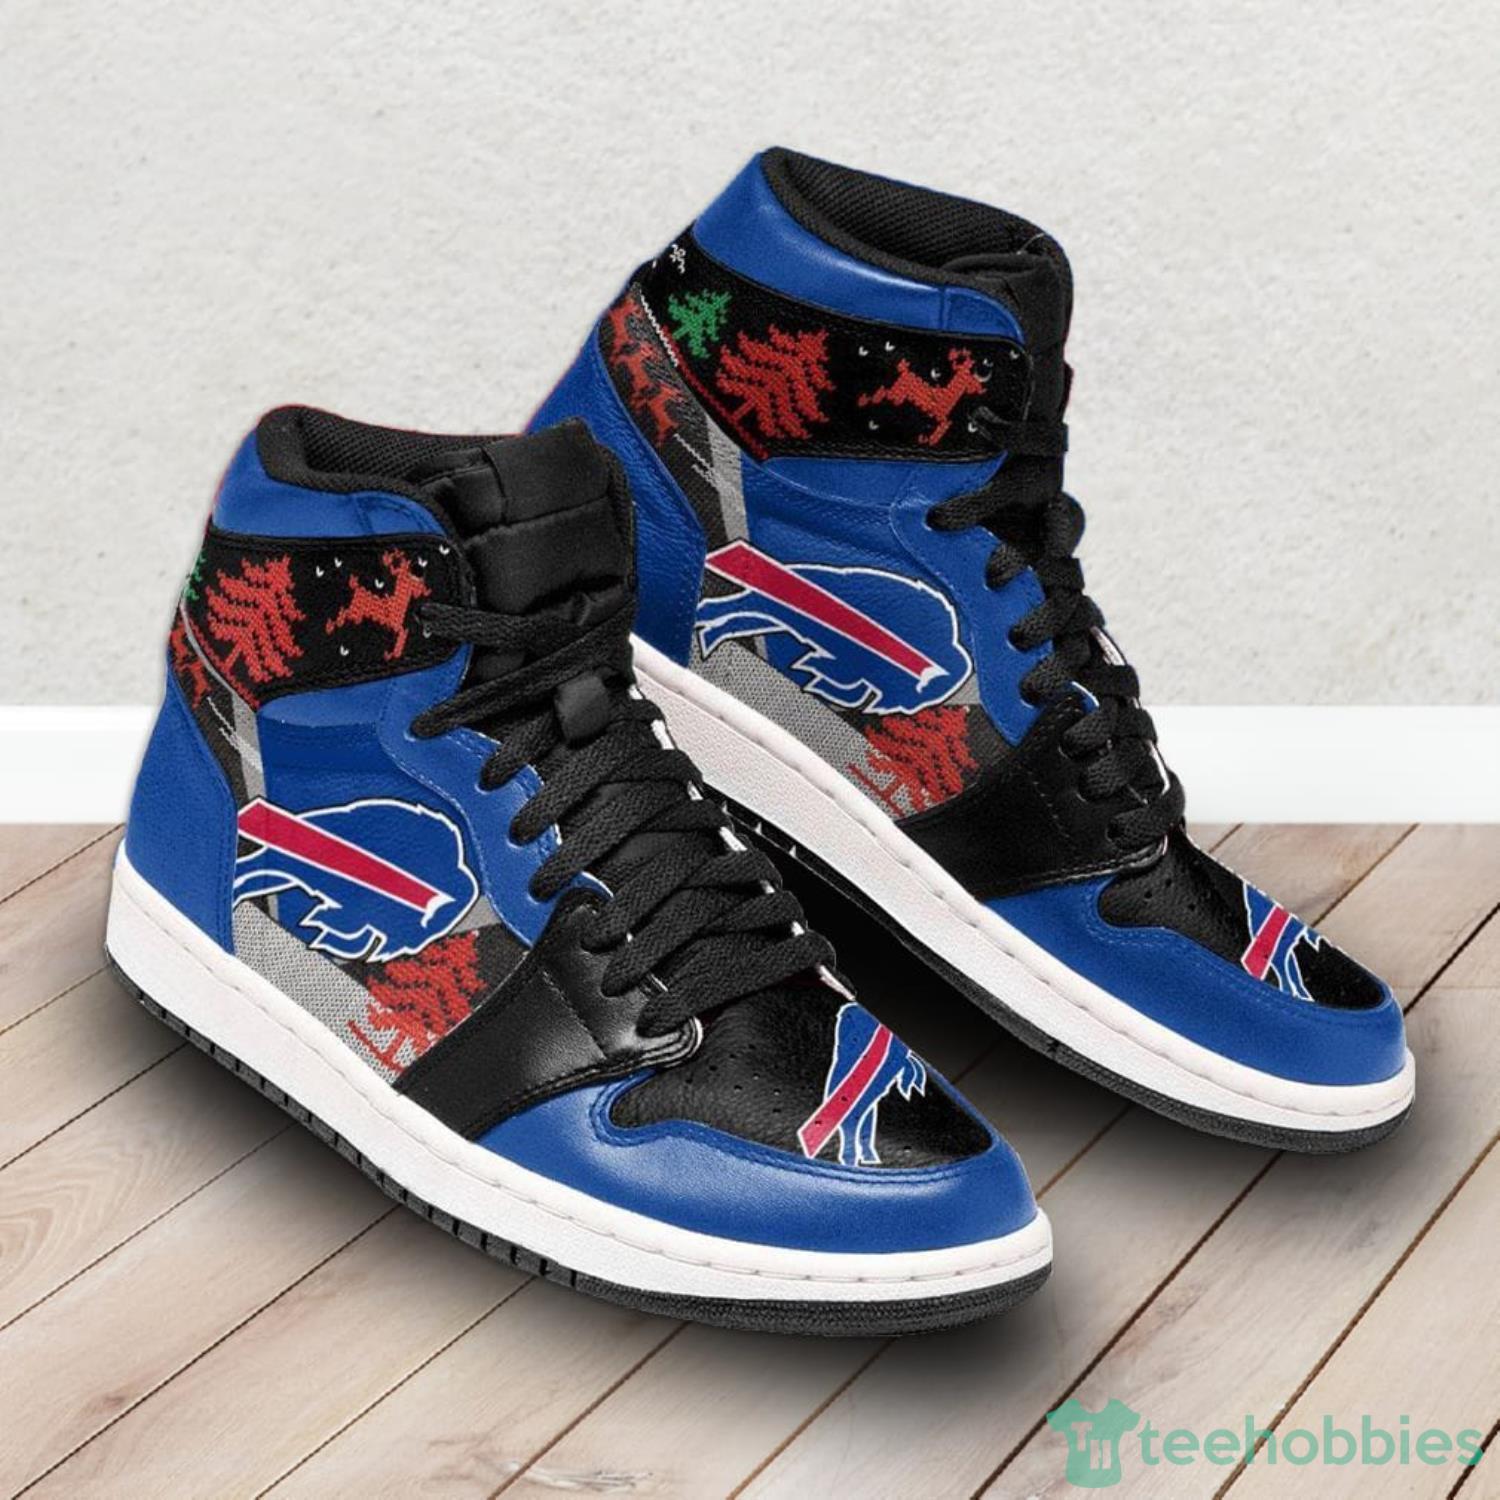 Christmas Pattern Buffalo Bills Nfl Air Jordan Hightop Shoes For Fans